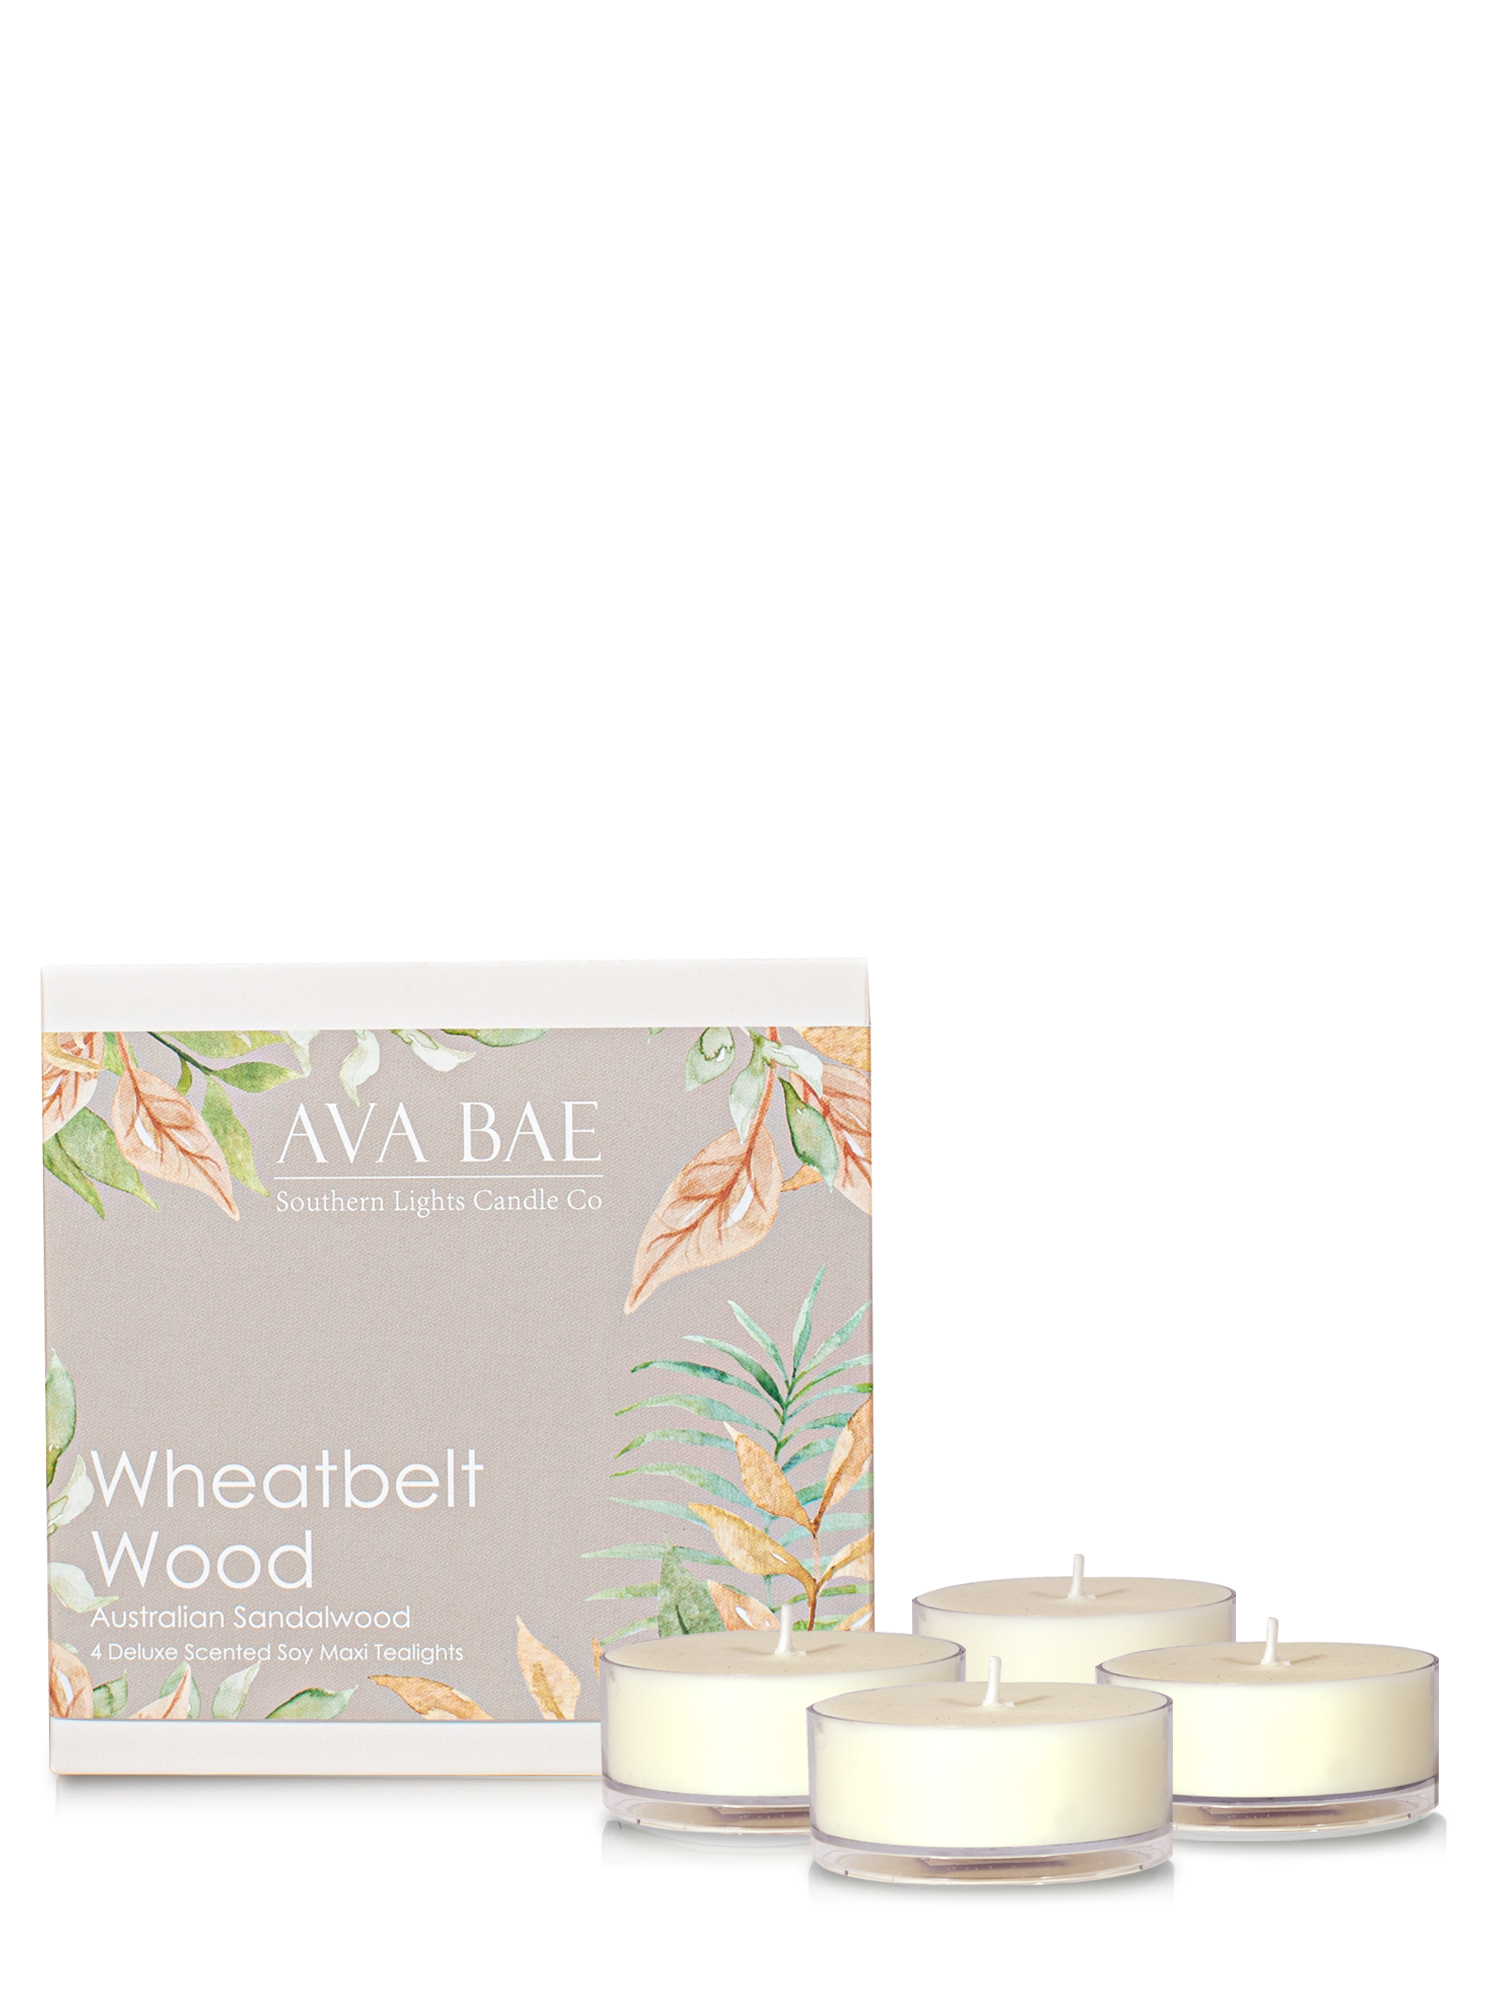 Ava Bae Soy Maxi Tealight Pack - Wheatbelt Wood